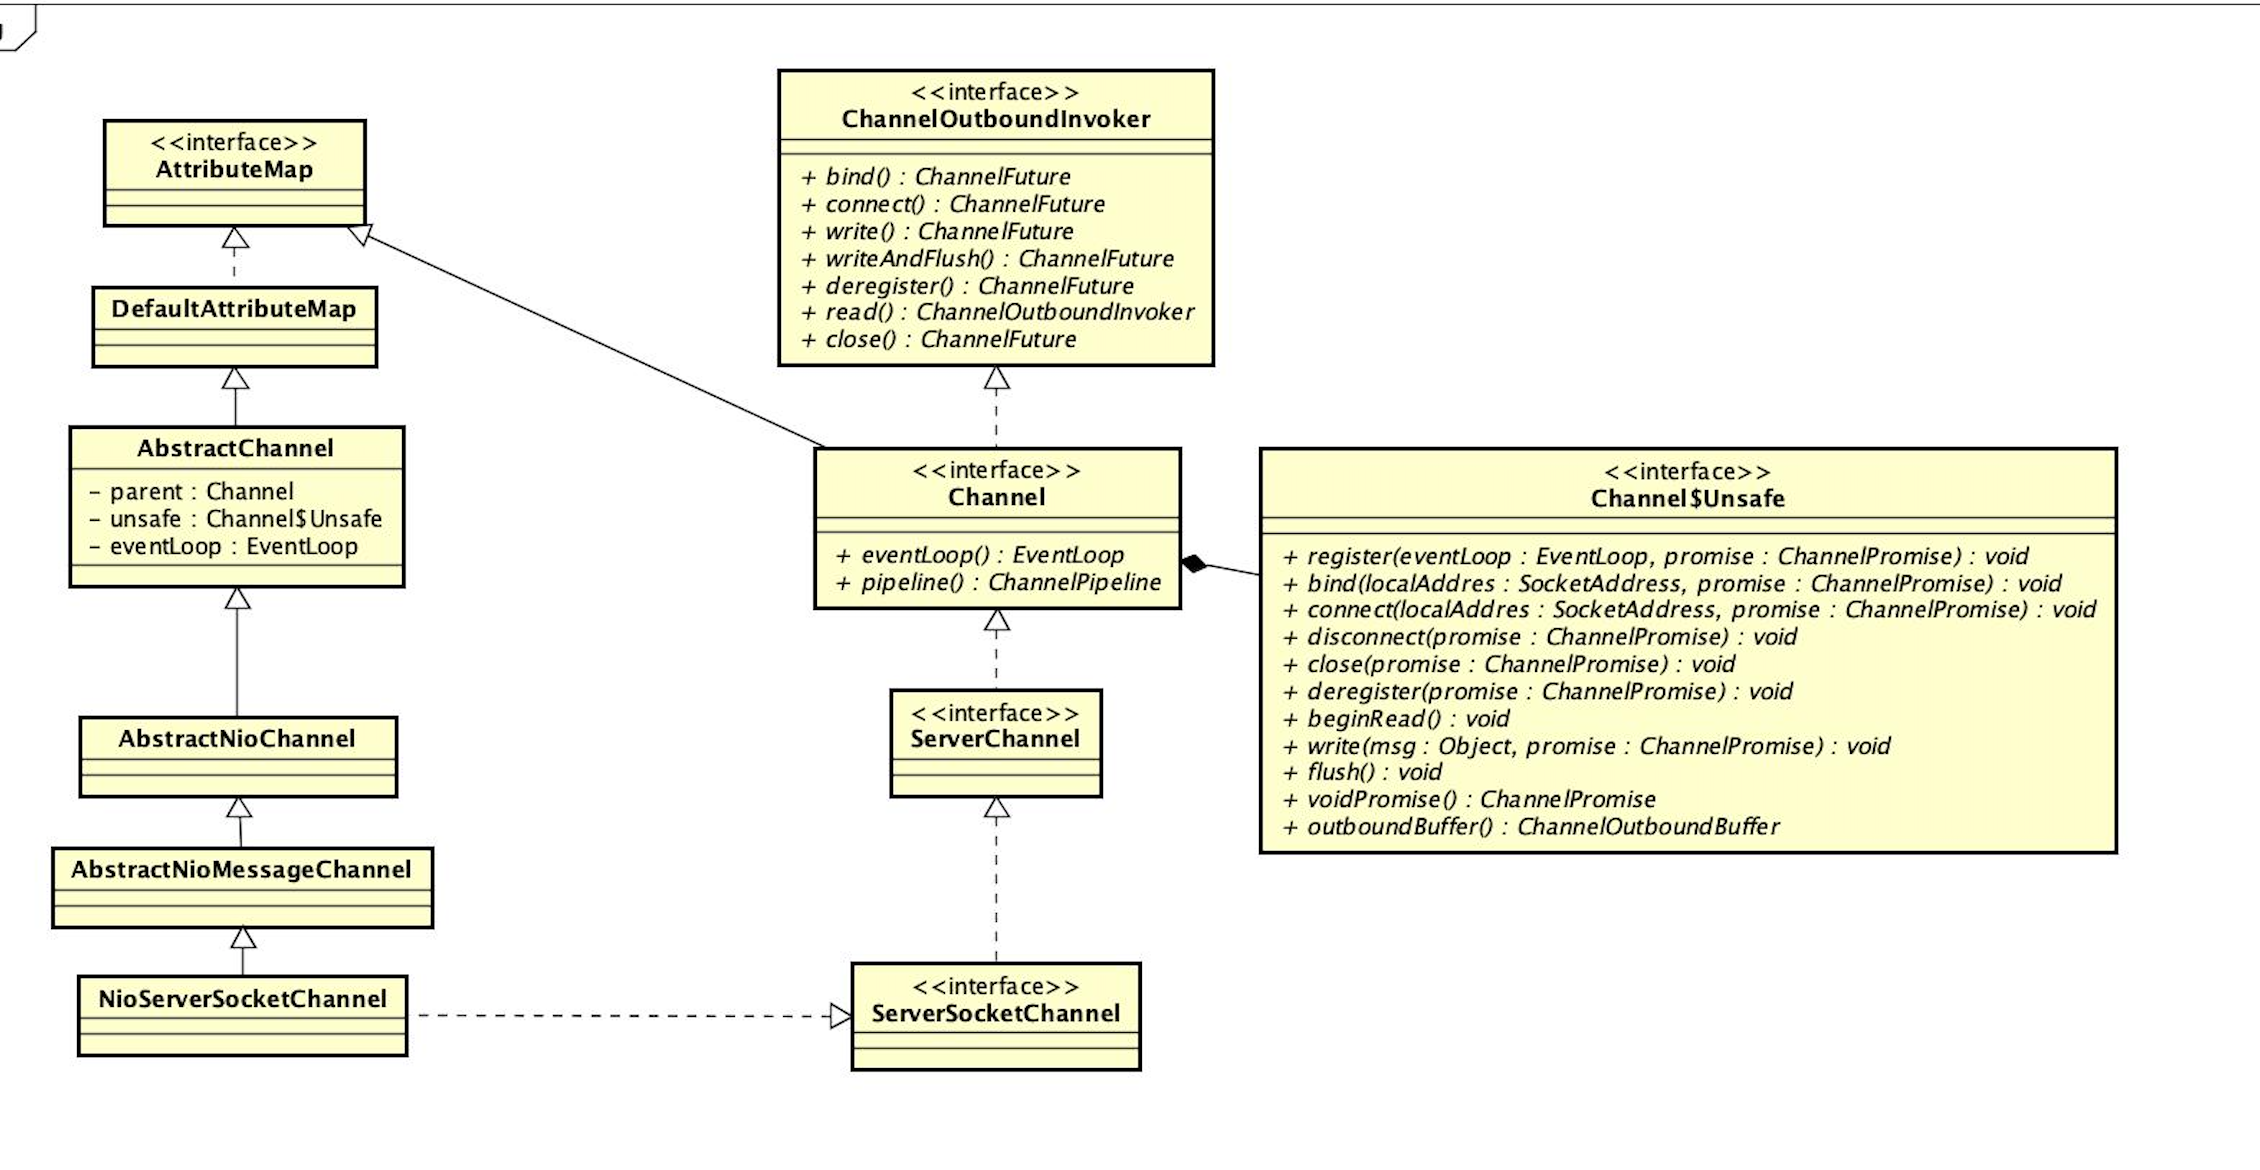 "NioServerSocketChannel类结构图"